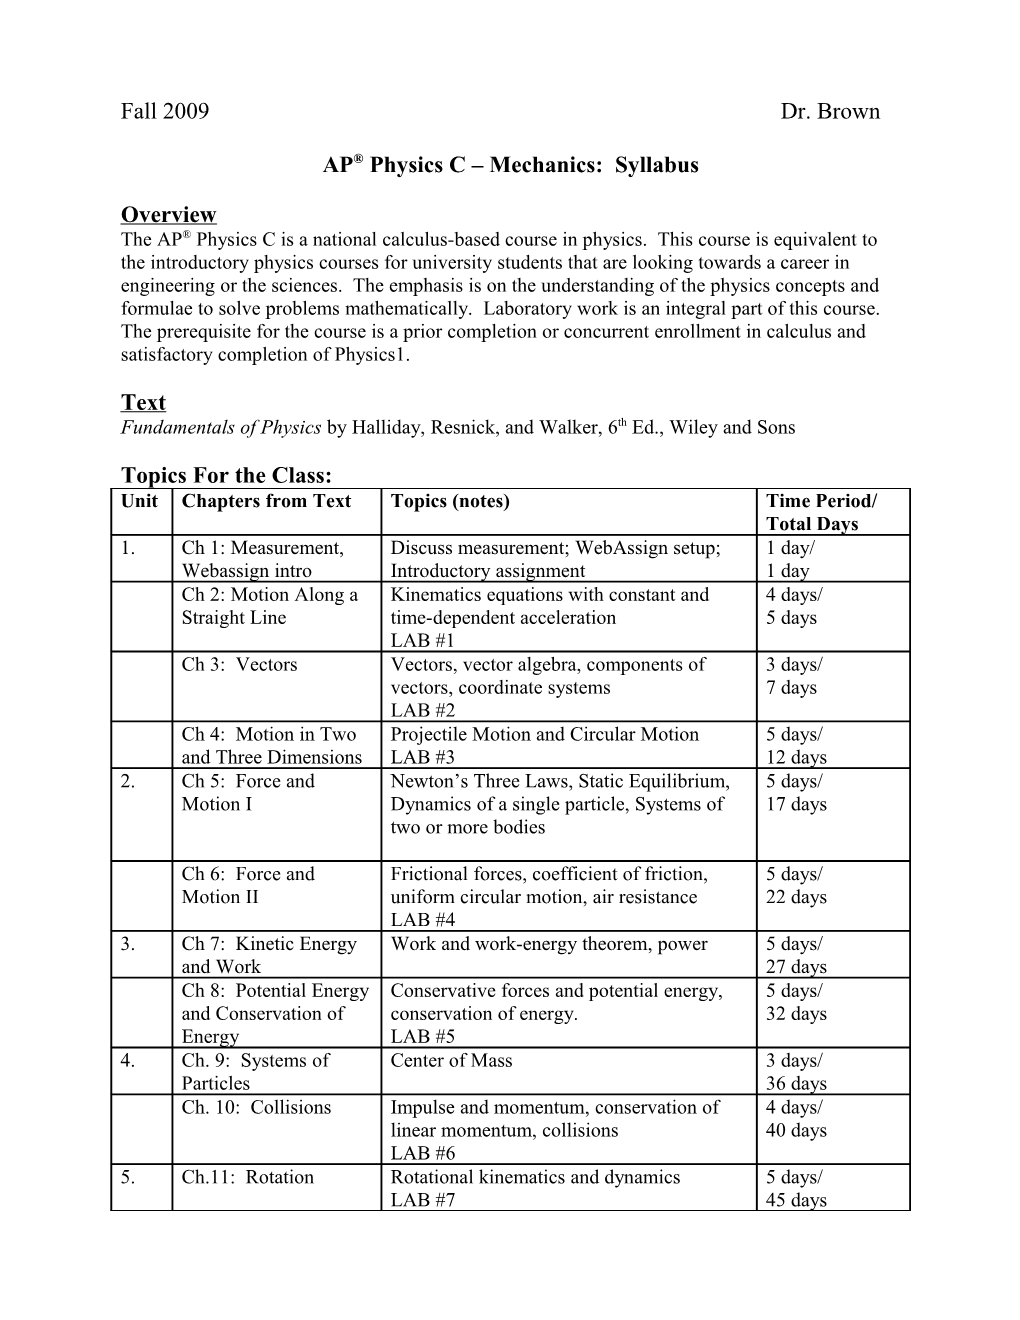 AP Physics C Mechanics: Syllabus s1